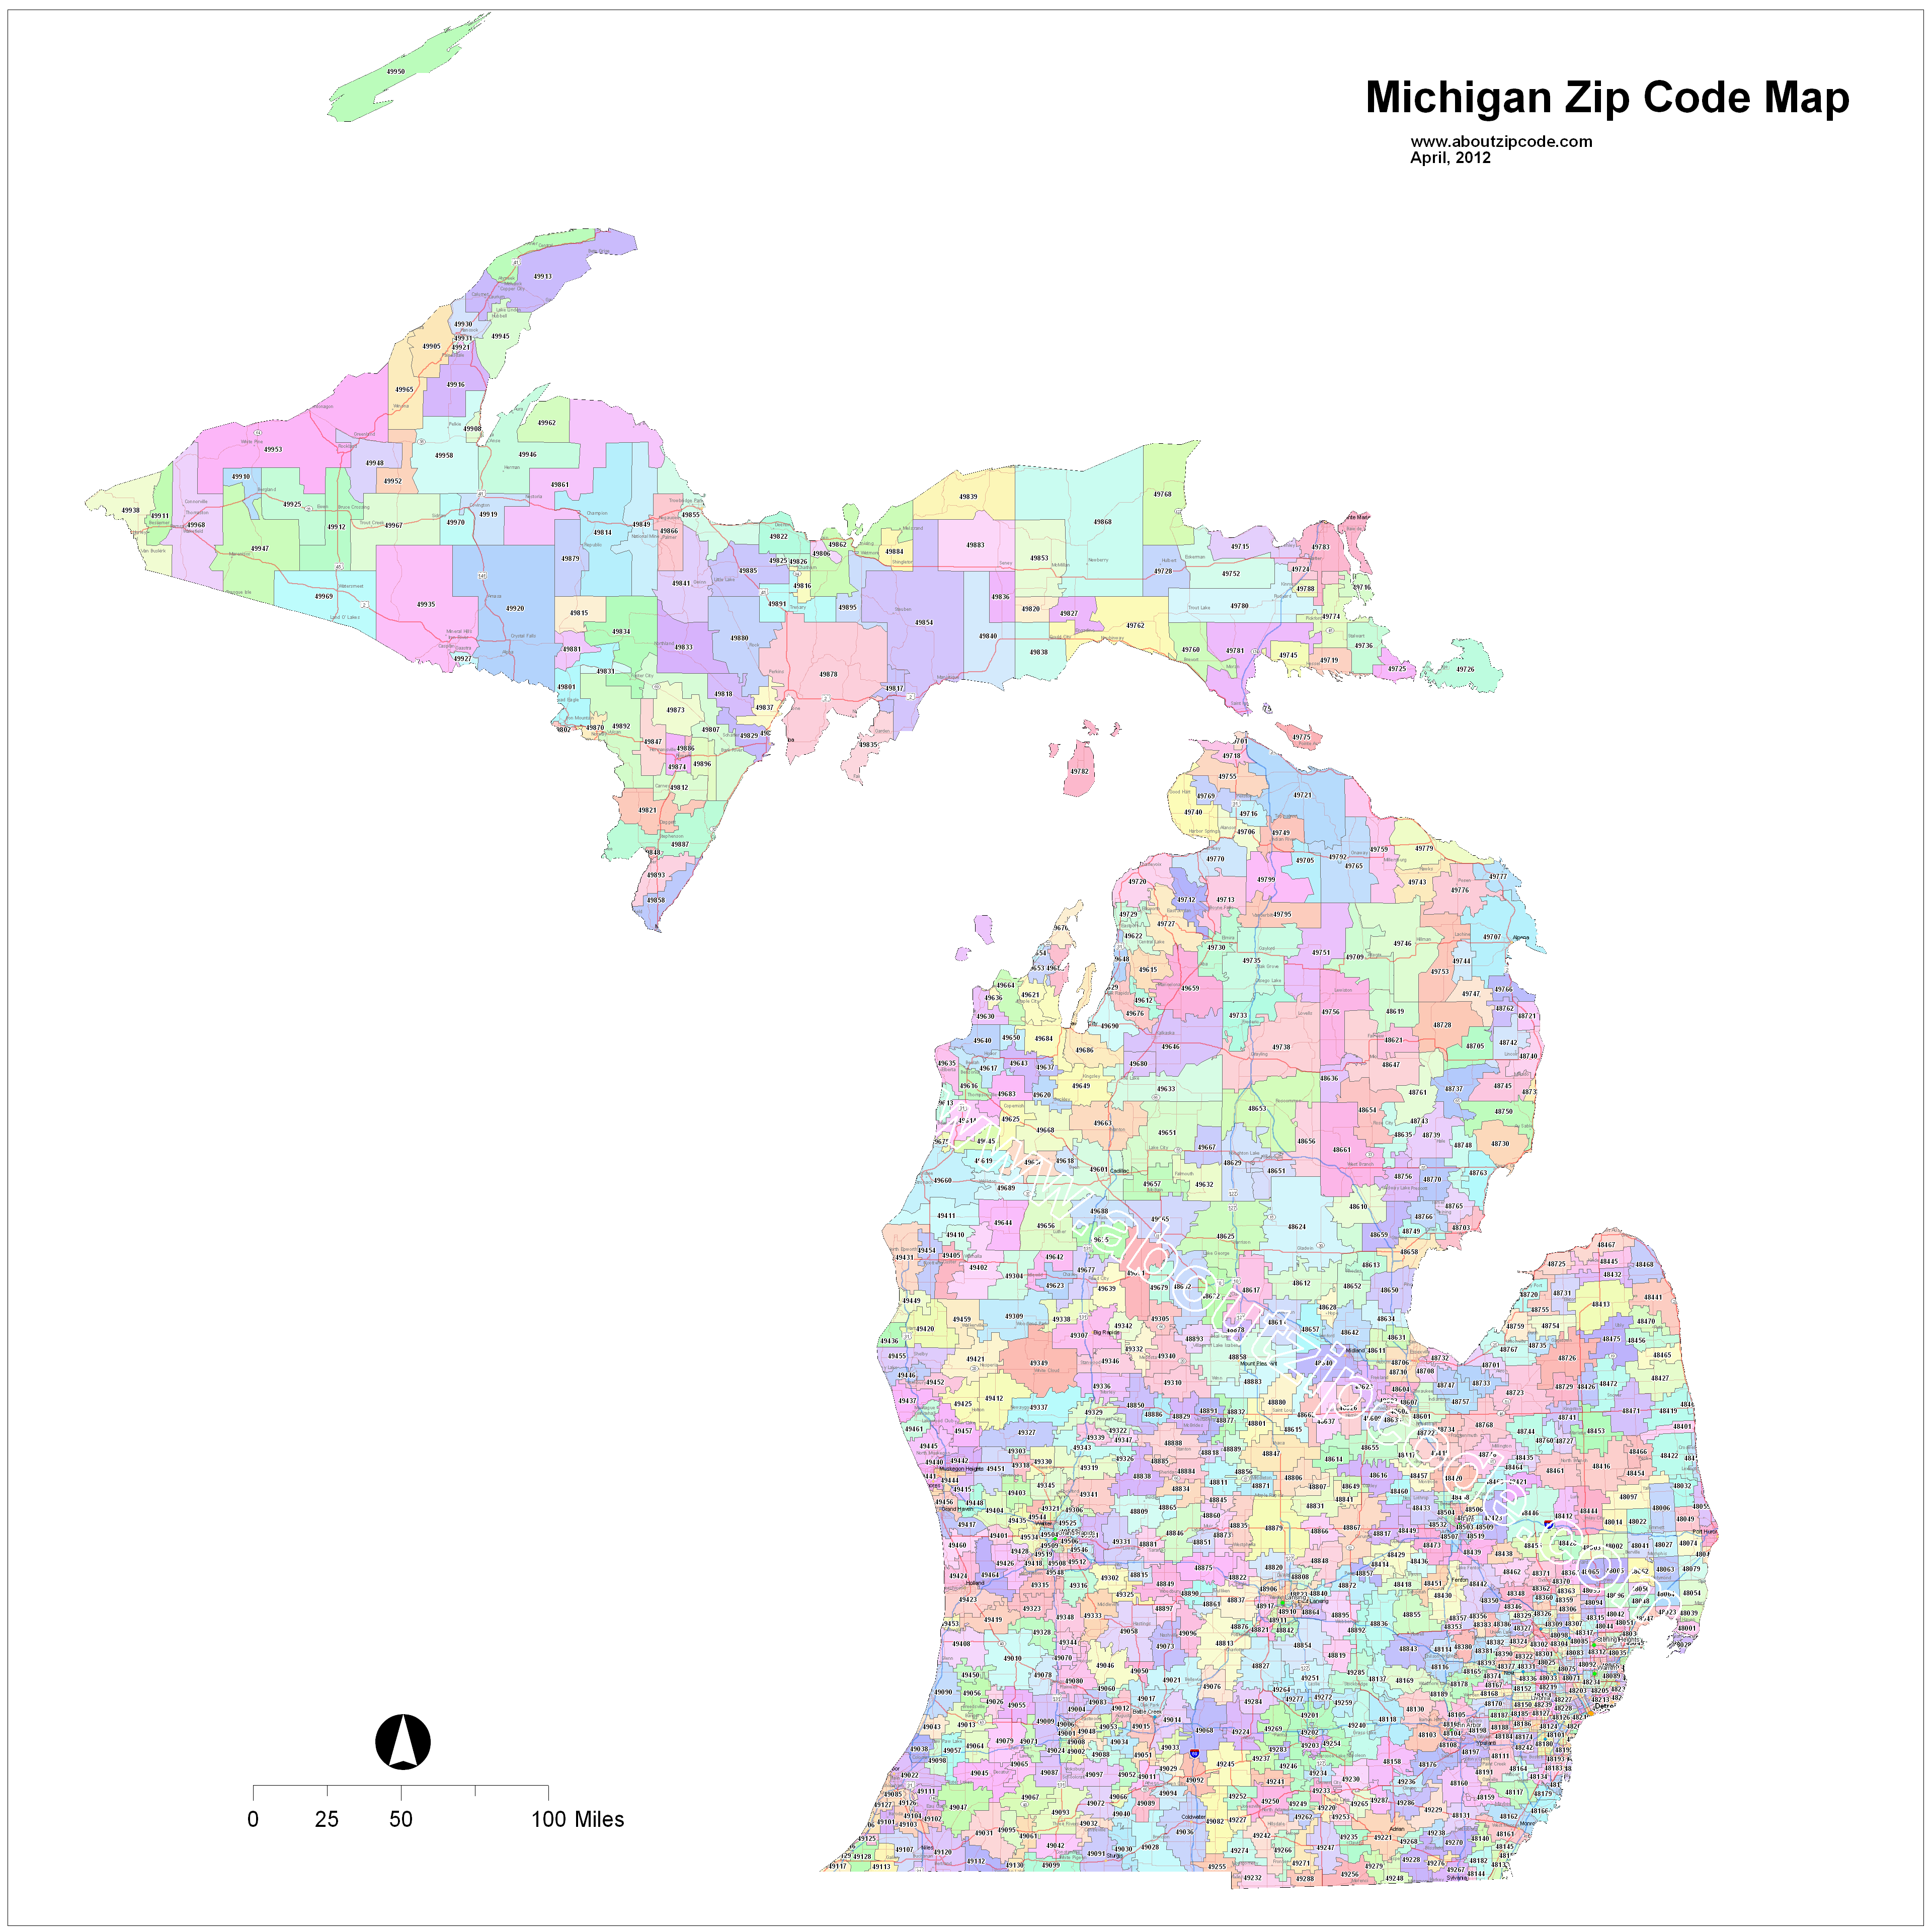 lansing mi zip code map Michigan Zip Code Maps Free Michigan Zip Code Maps lansing mi zip code map